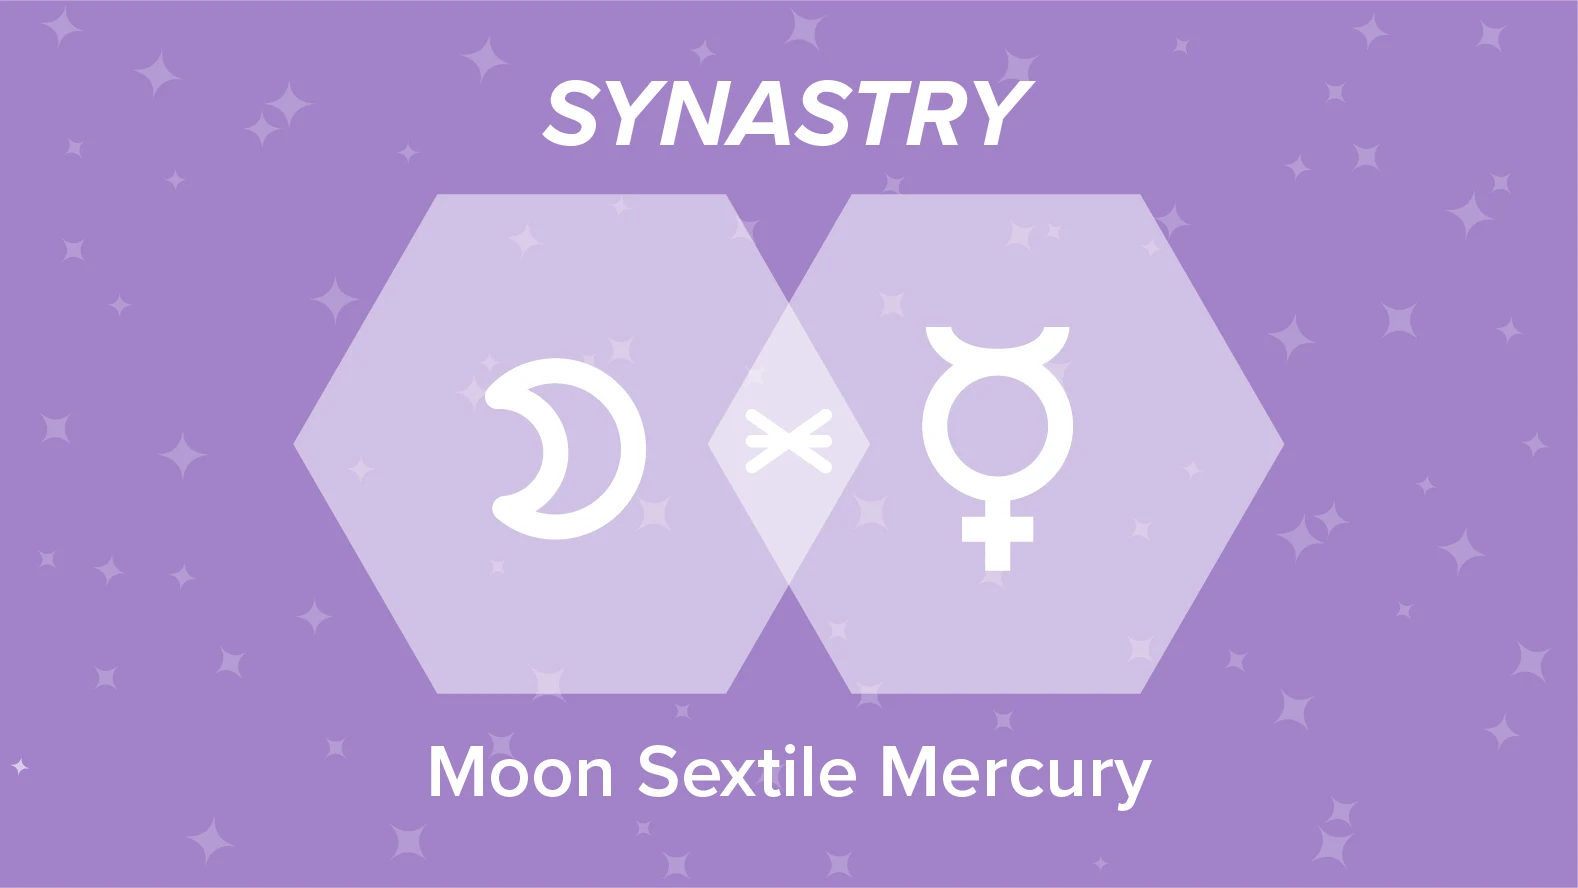 Moon Sextile Mercury Synastry